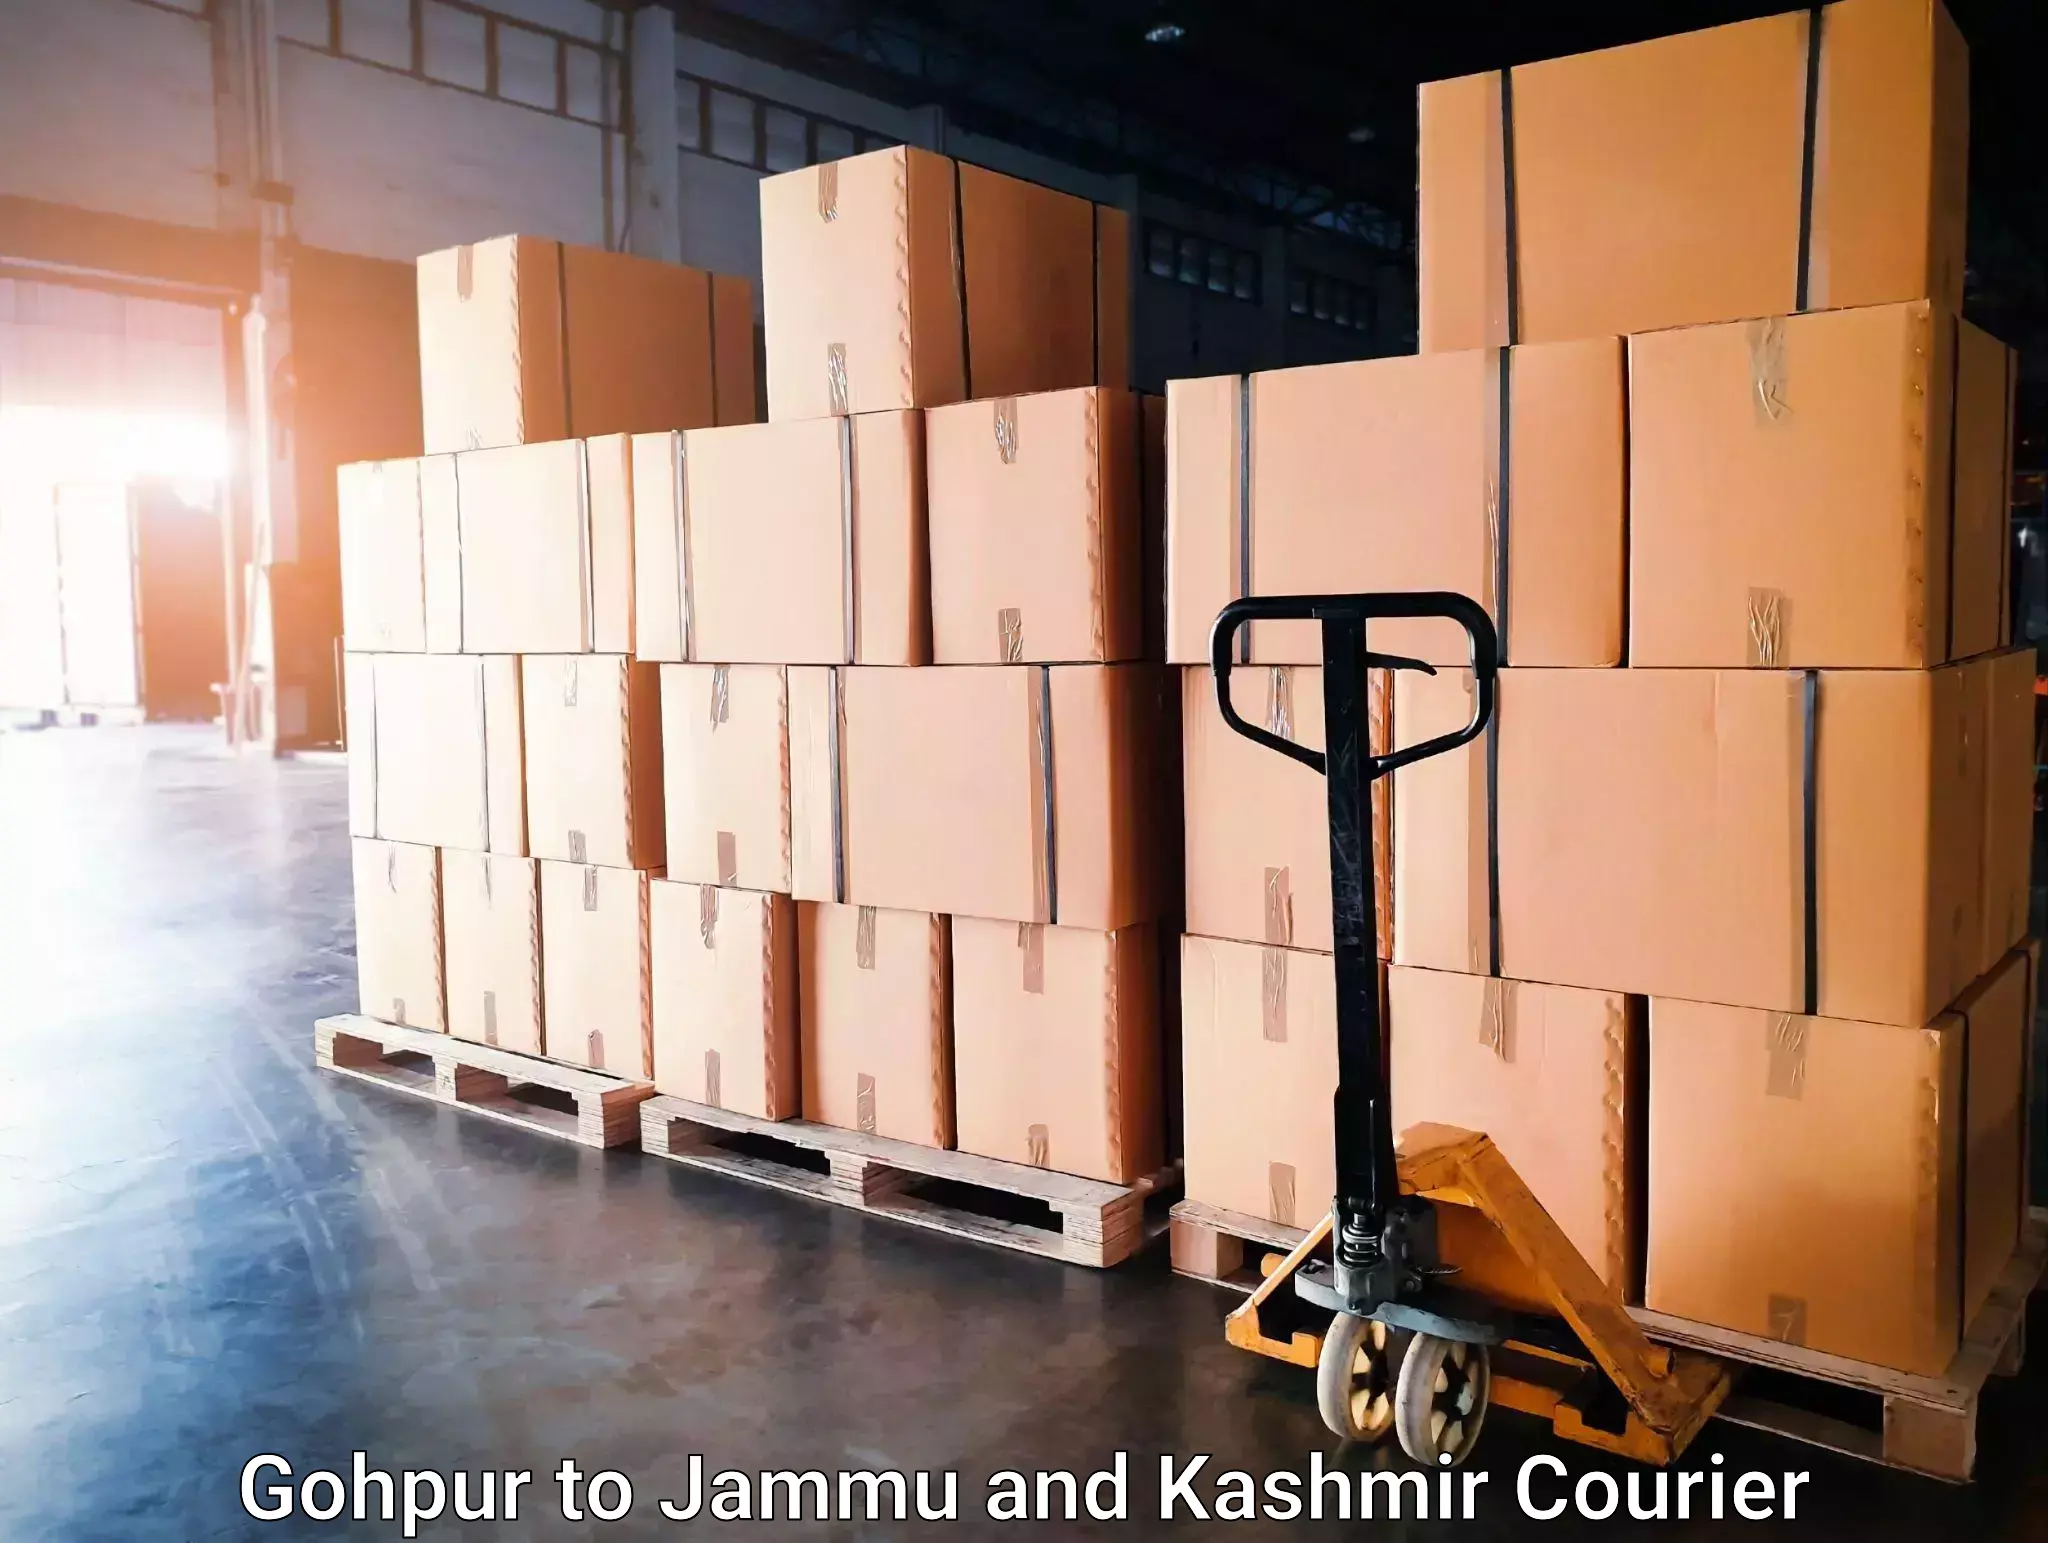 Next-day delivery options Gohpur to Srinagar Kashmir